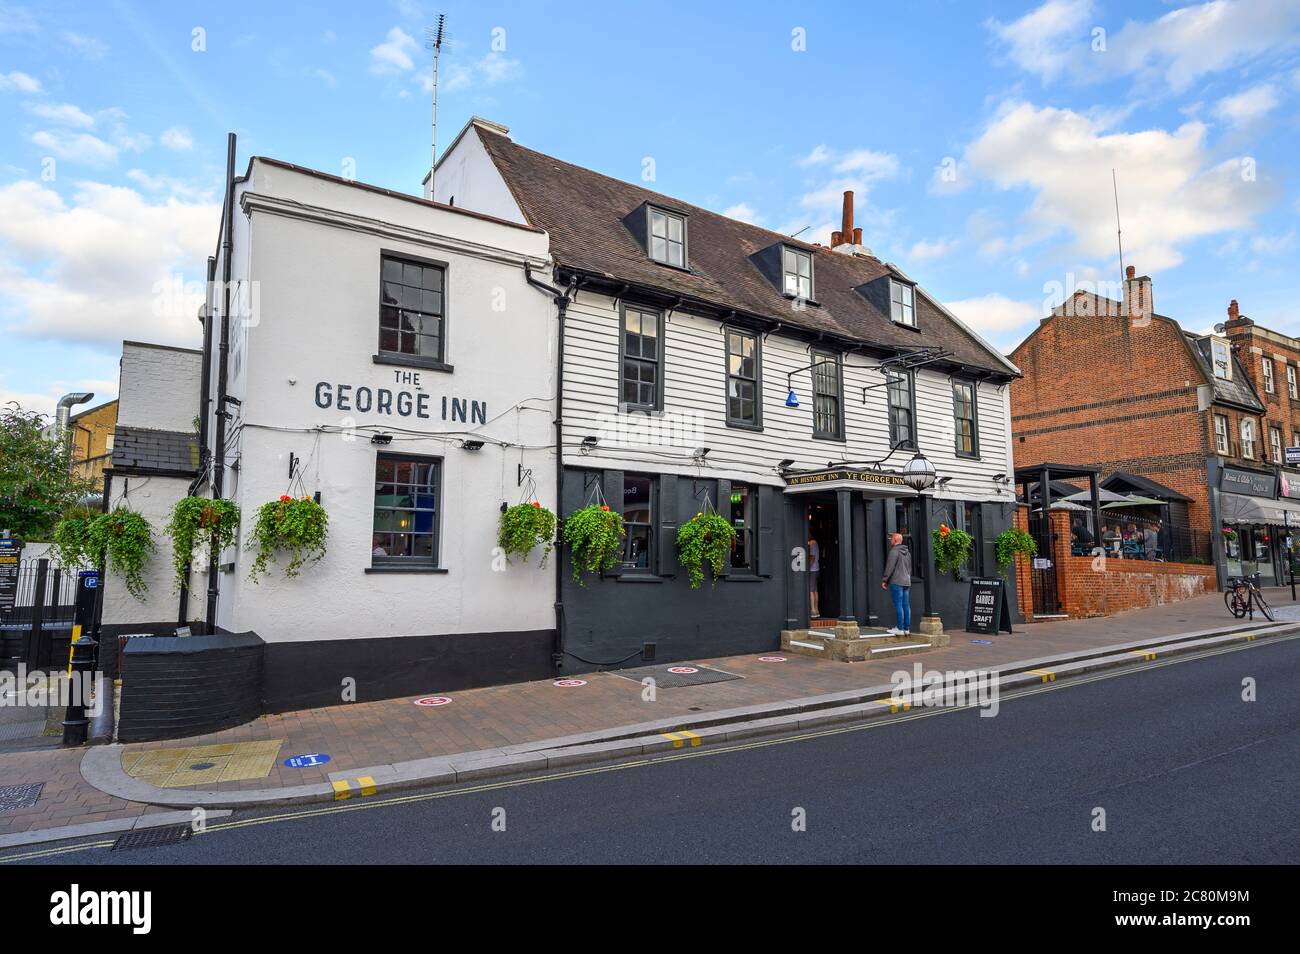 Beckenham (Greater London), Kent, UK. The George Inn, an old pub located on Beckenham High Street. The George Inn dates from around 1647. Stock Photo